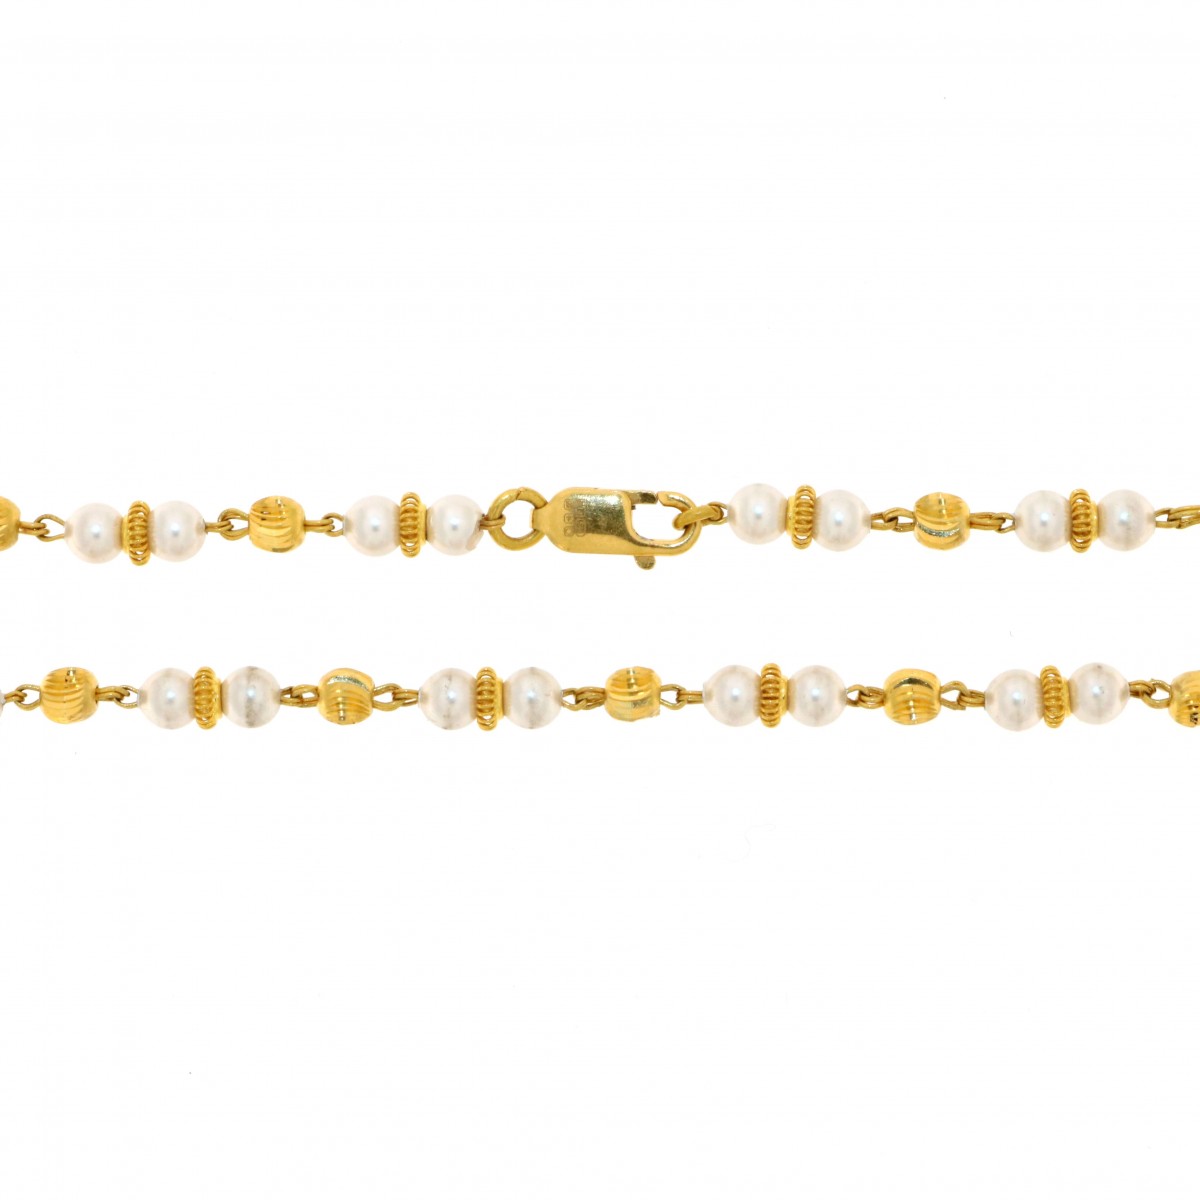 22ct Real Gold Asian/Indian/Pakistani Style Necklace-Mala